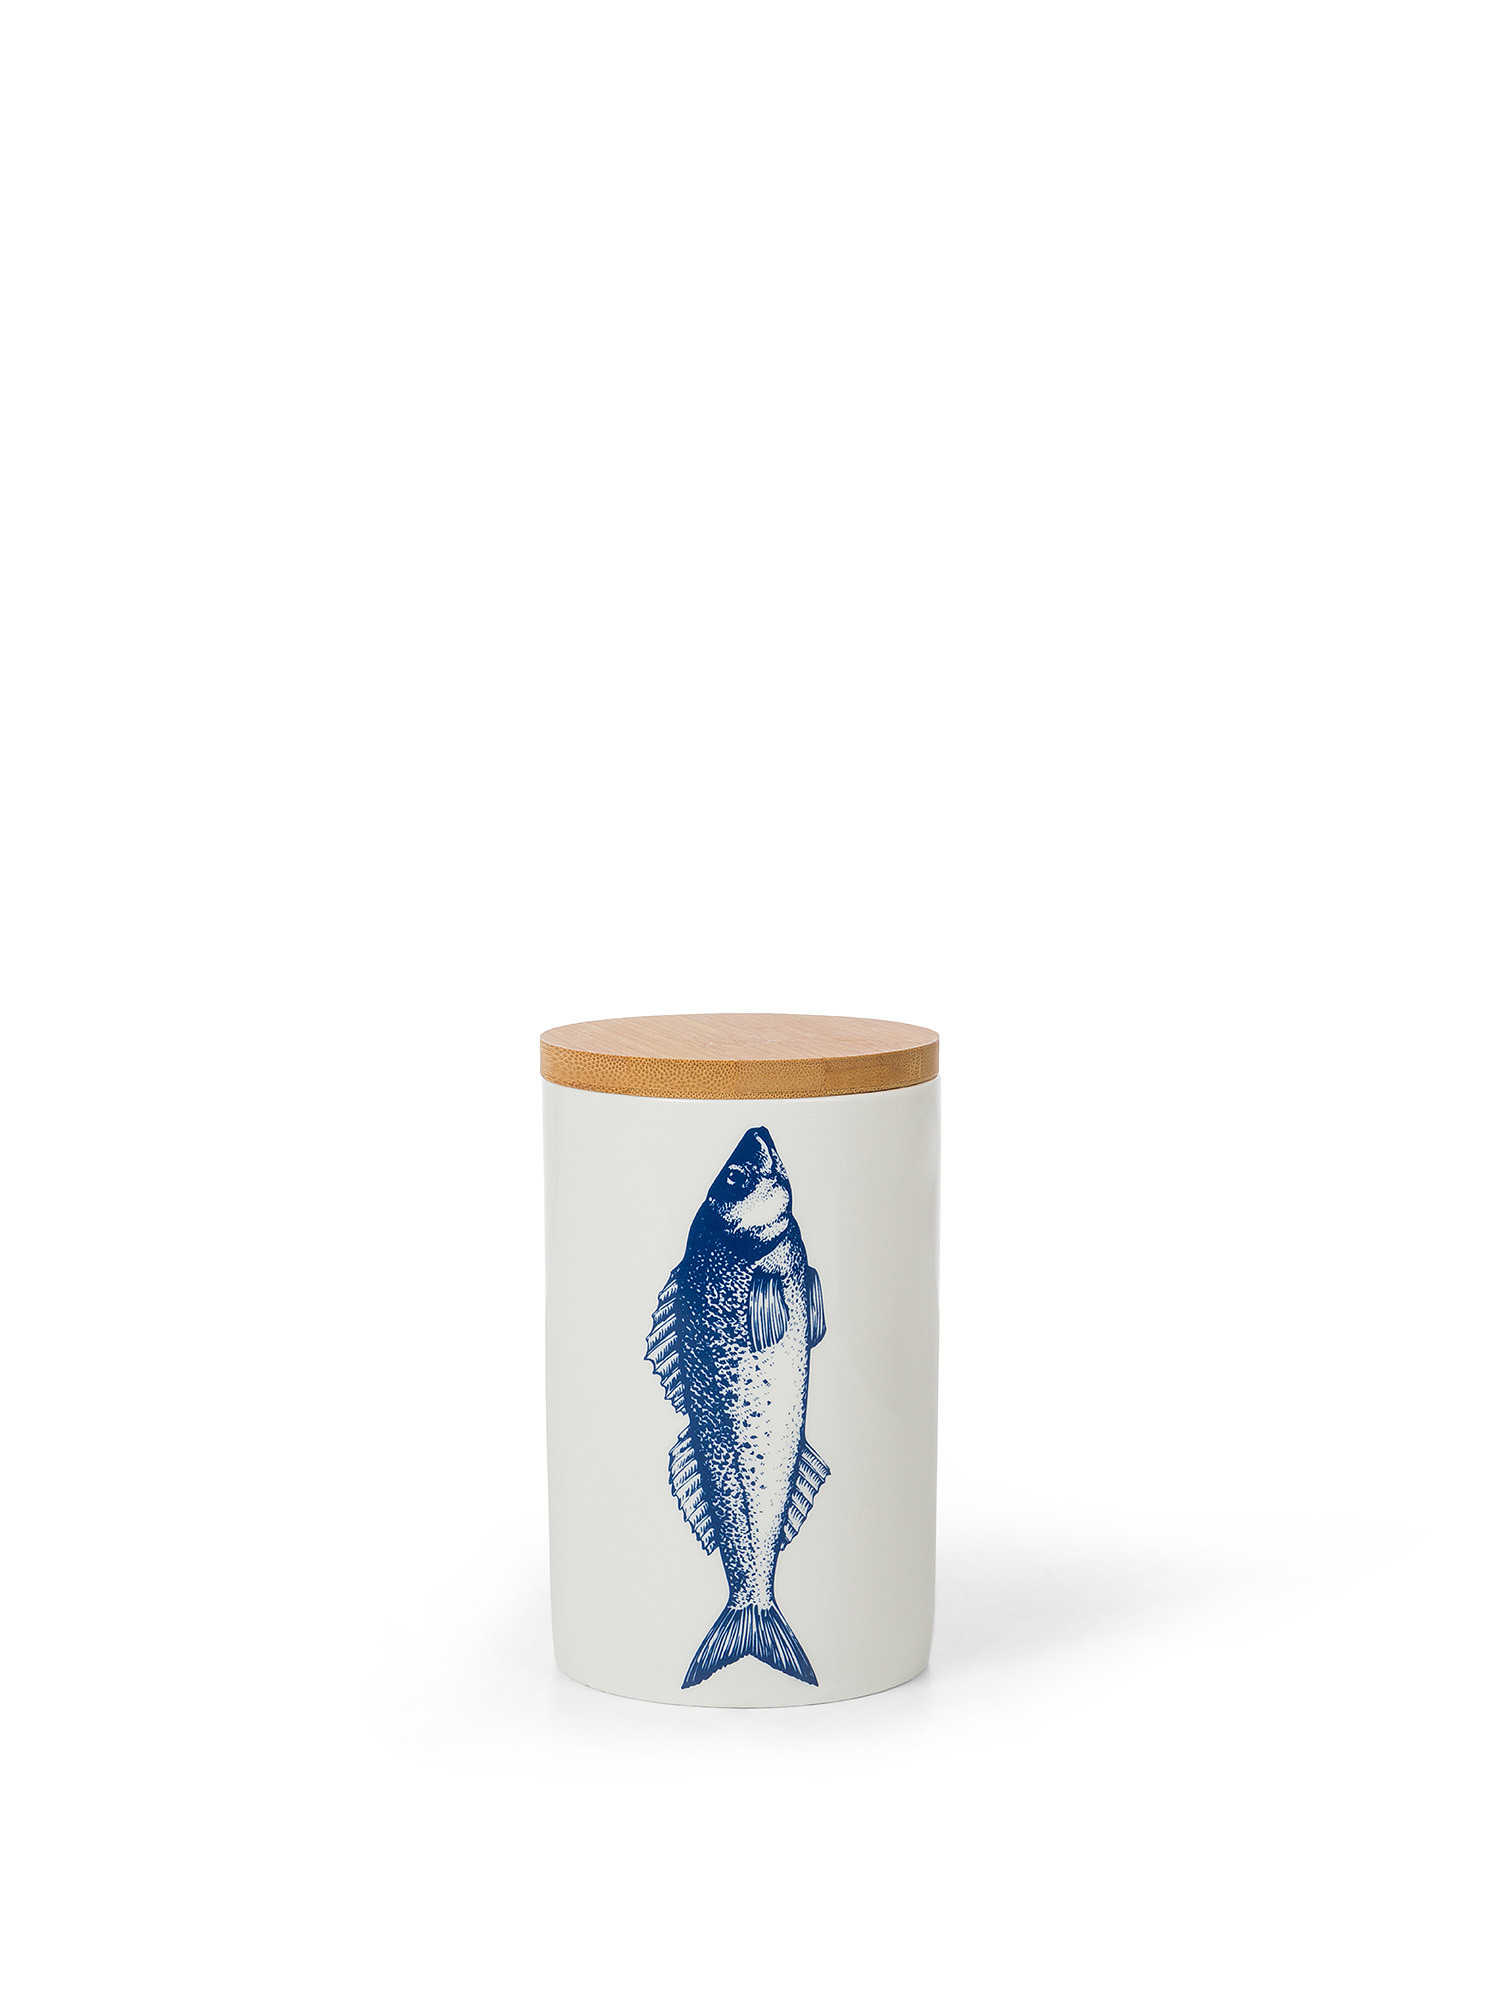 New bone china jar with fish motif, White, large image number 0